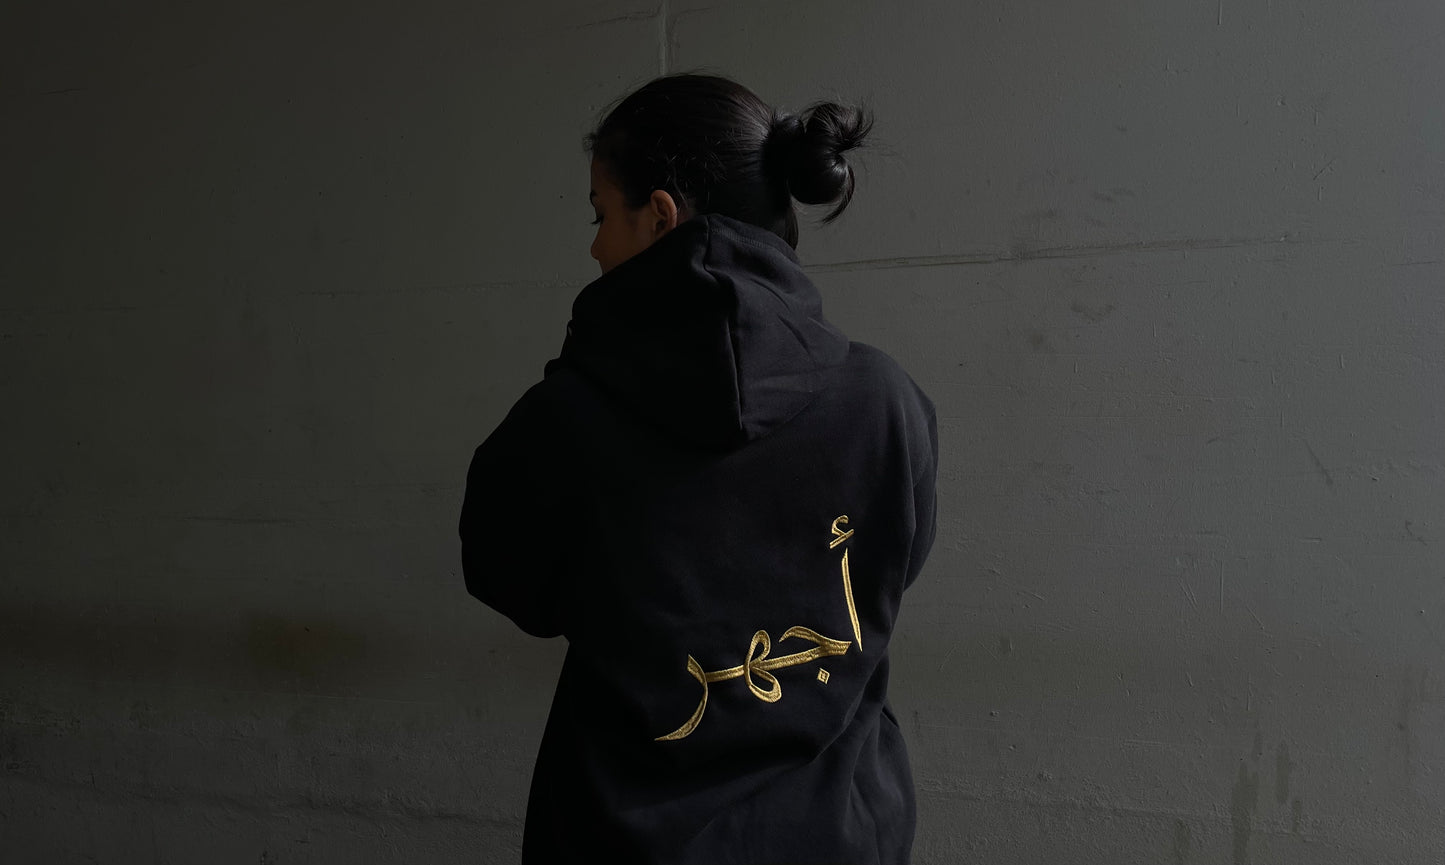 Arabic name on back sweatshirt/hoodie